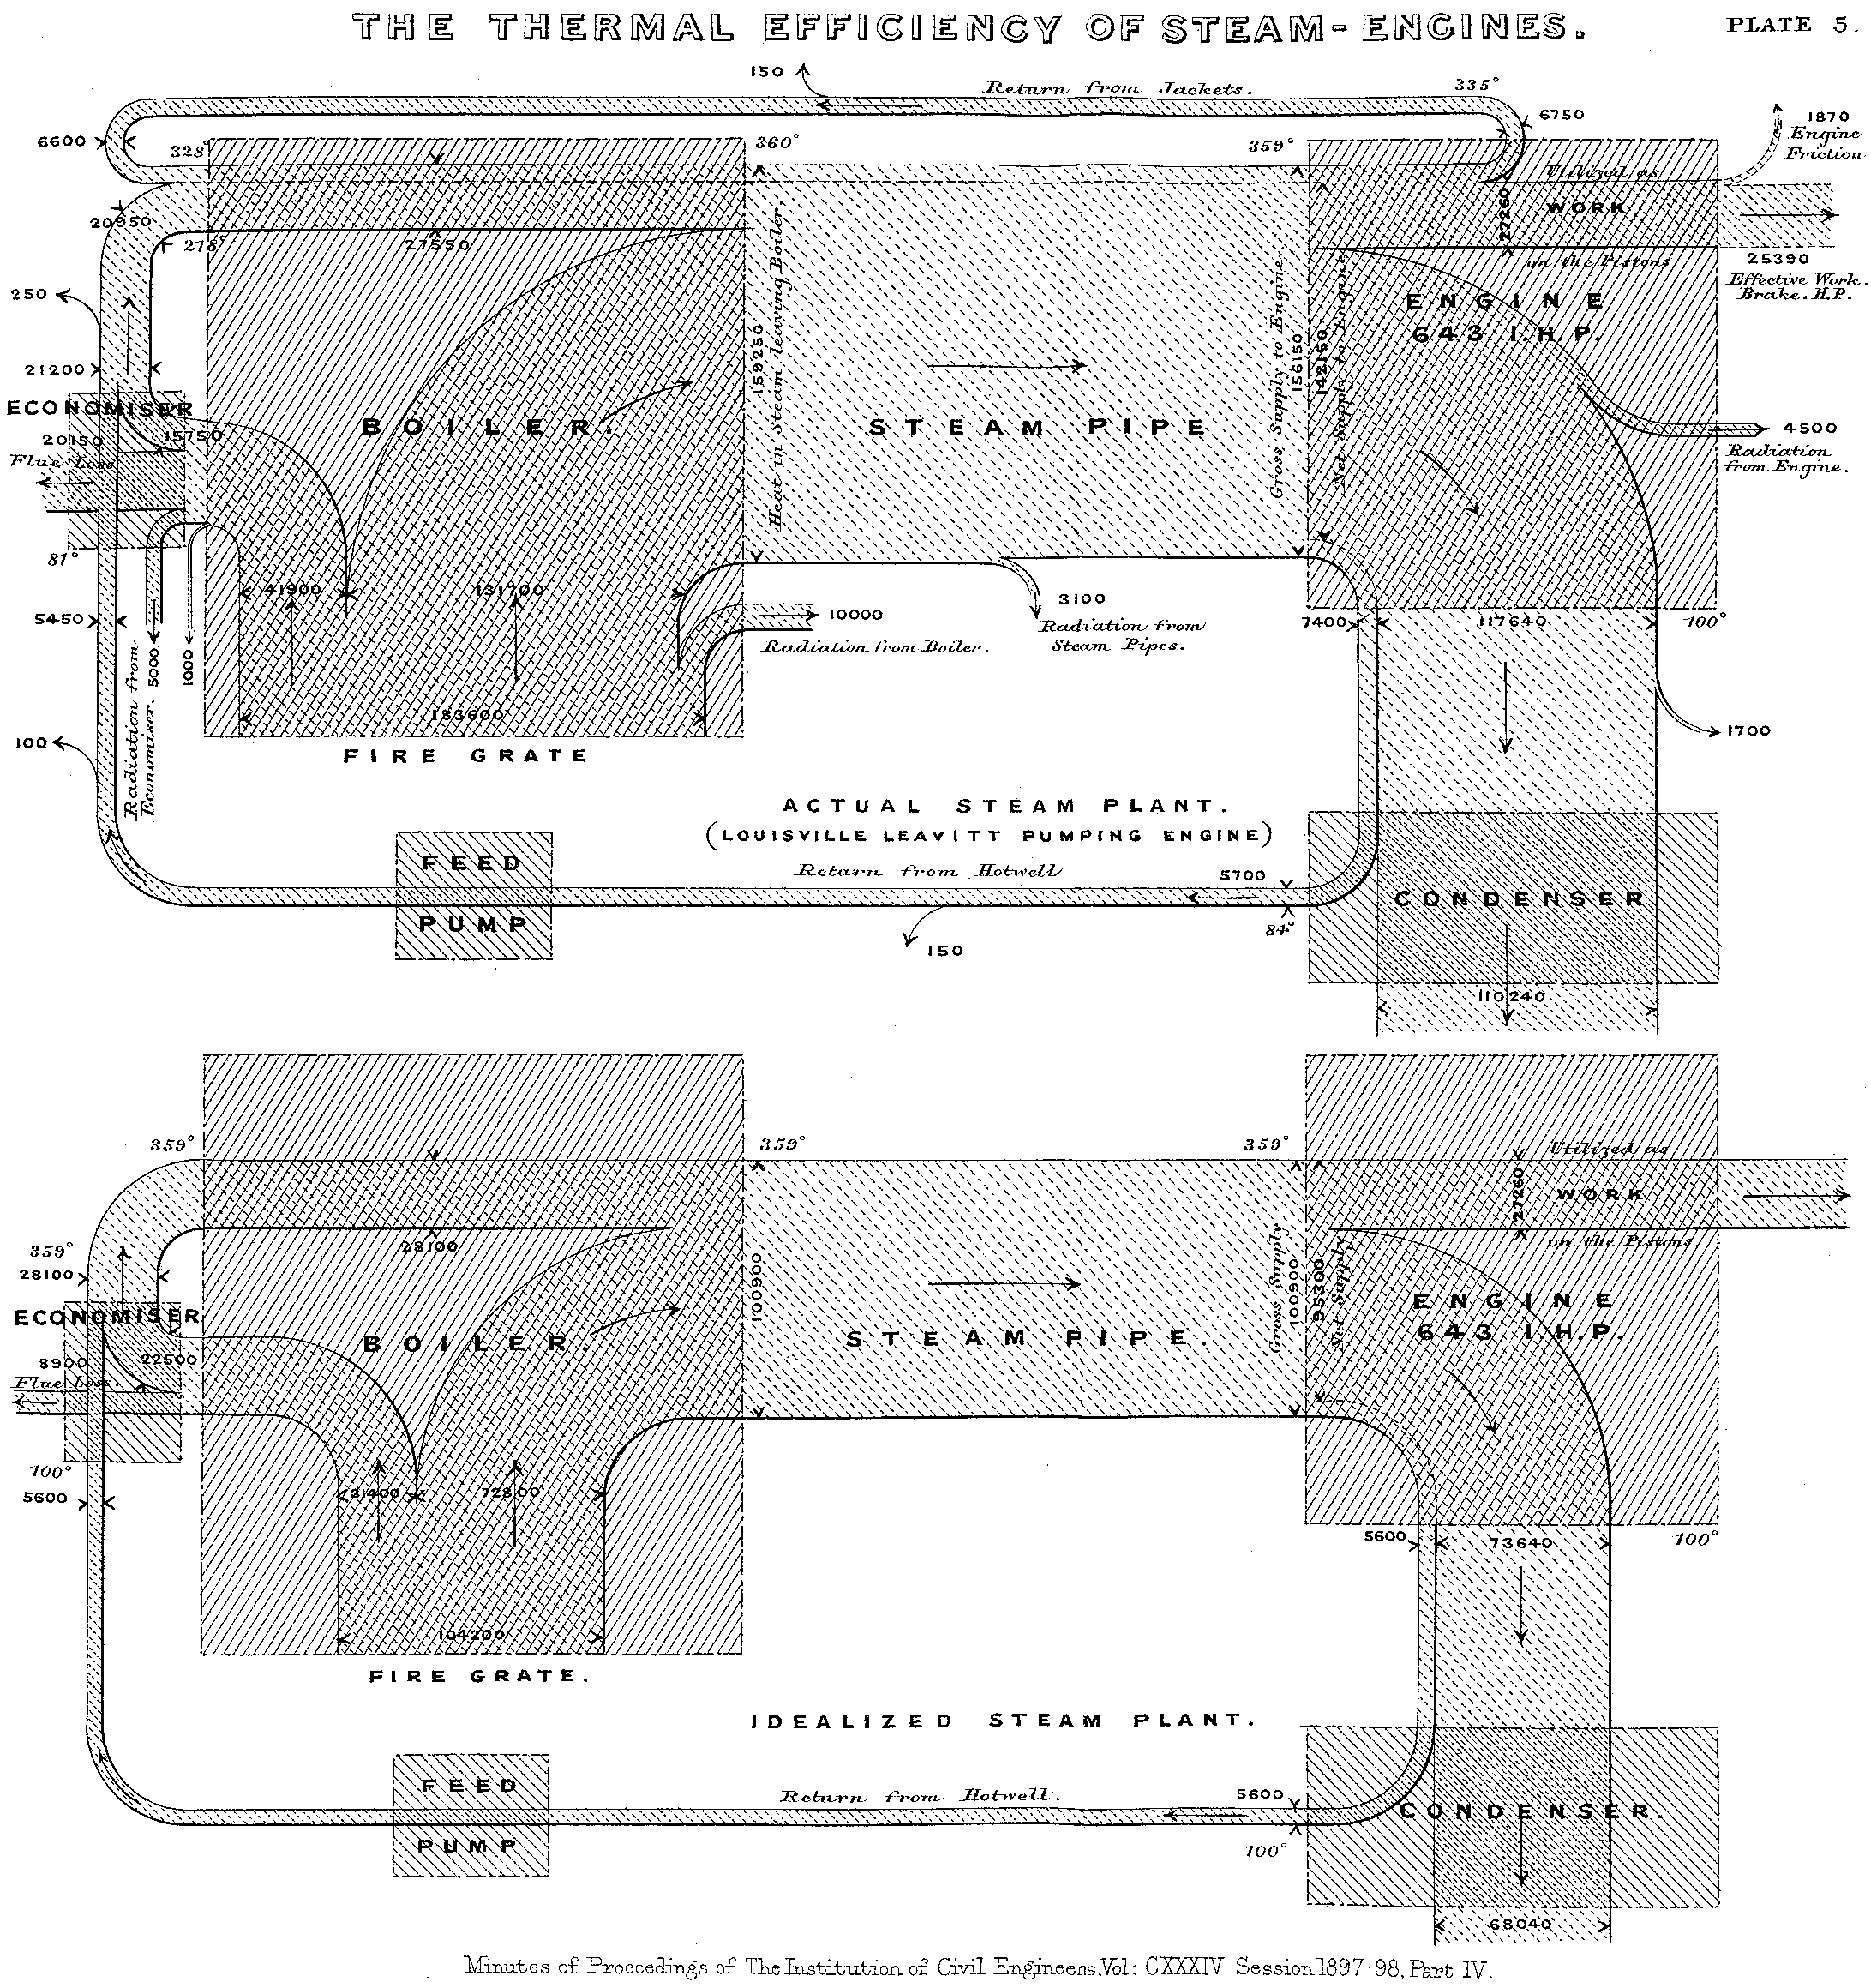 Original Sankey Diagram (Source: Wikipedia)